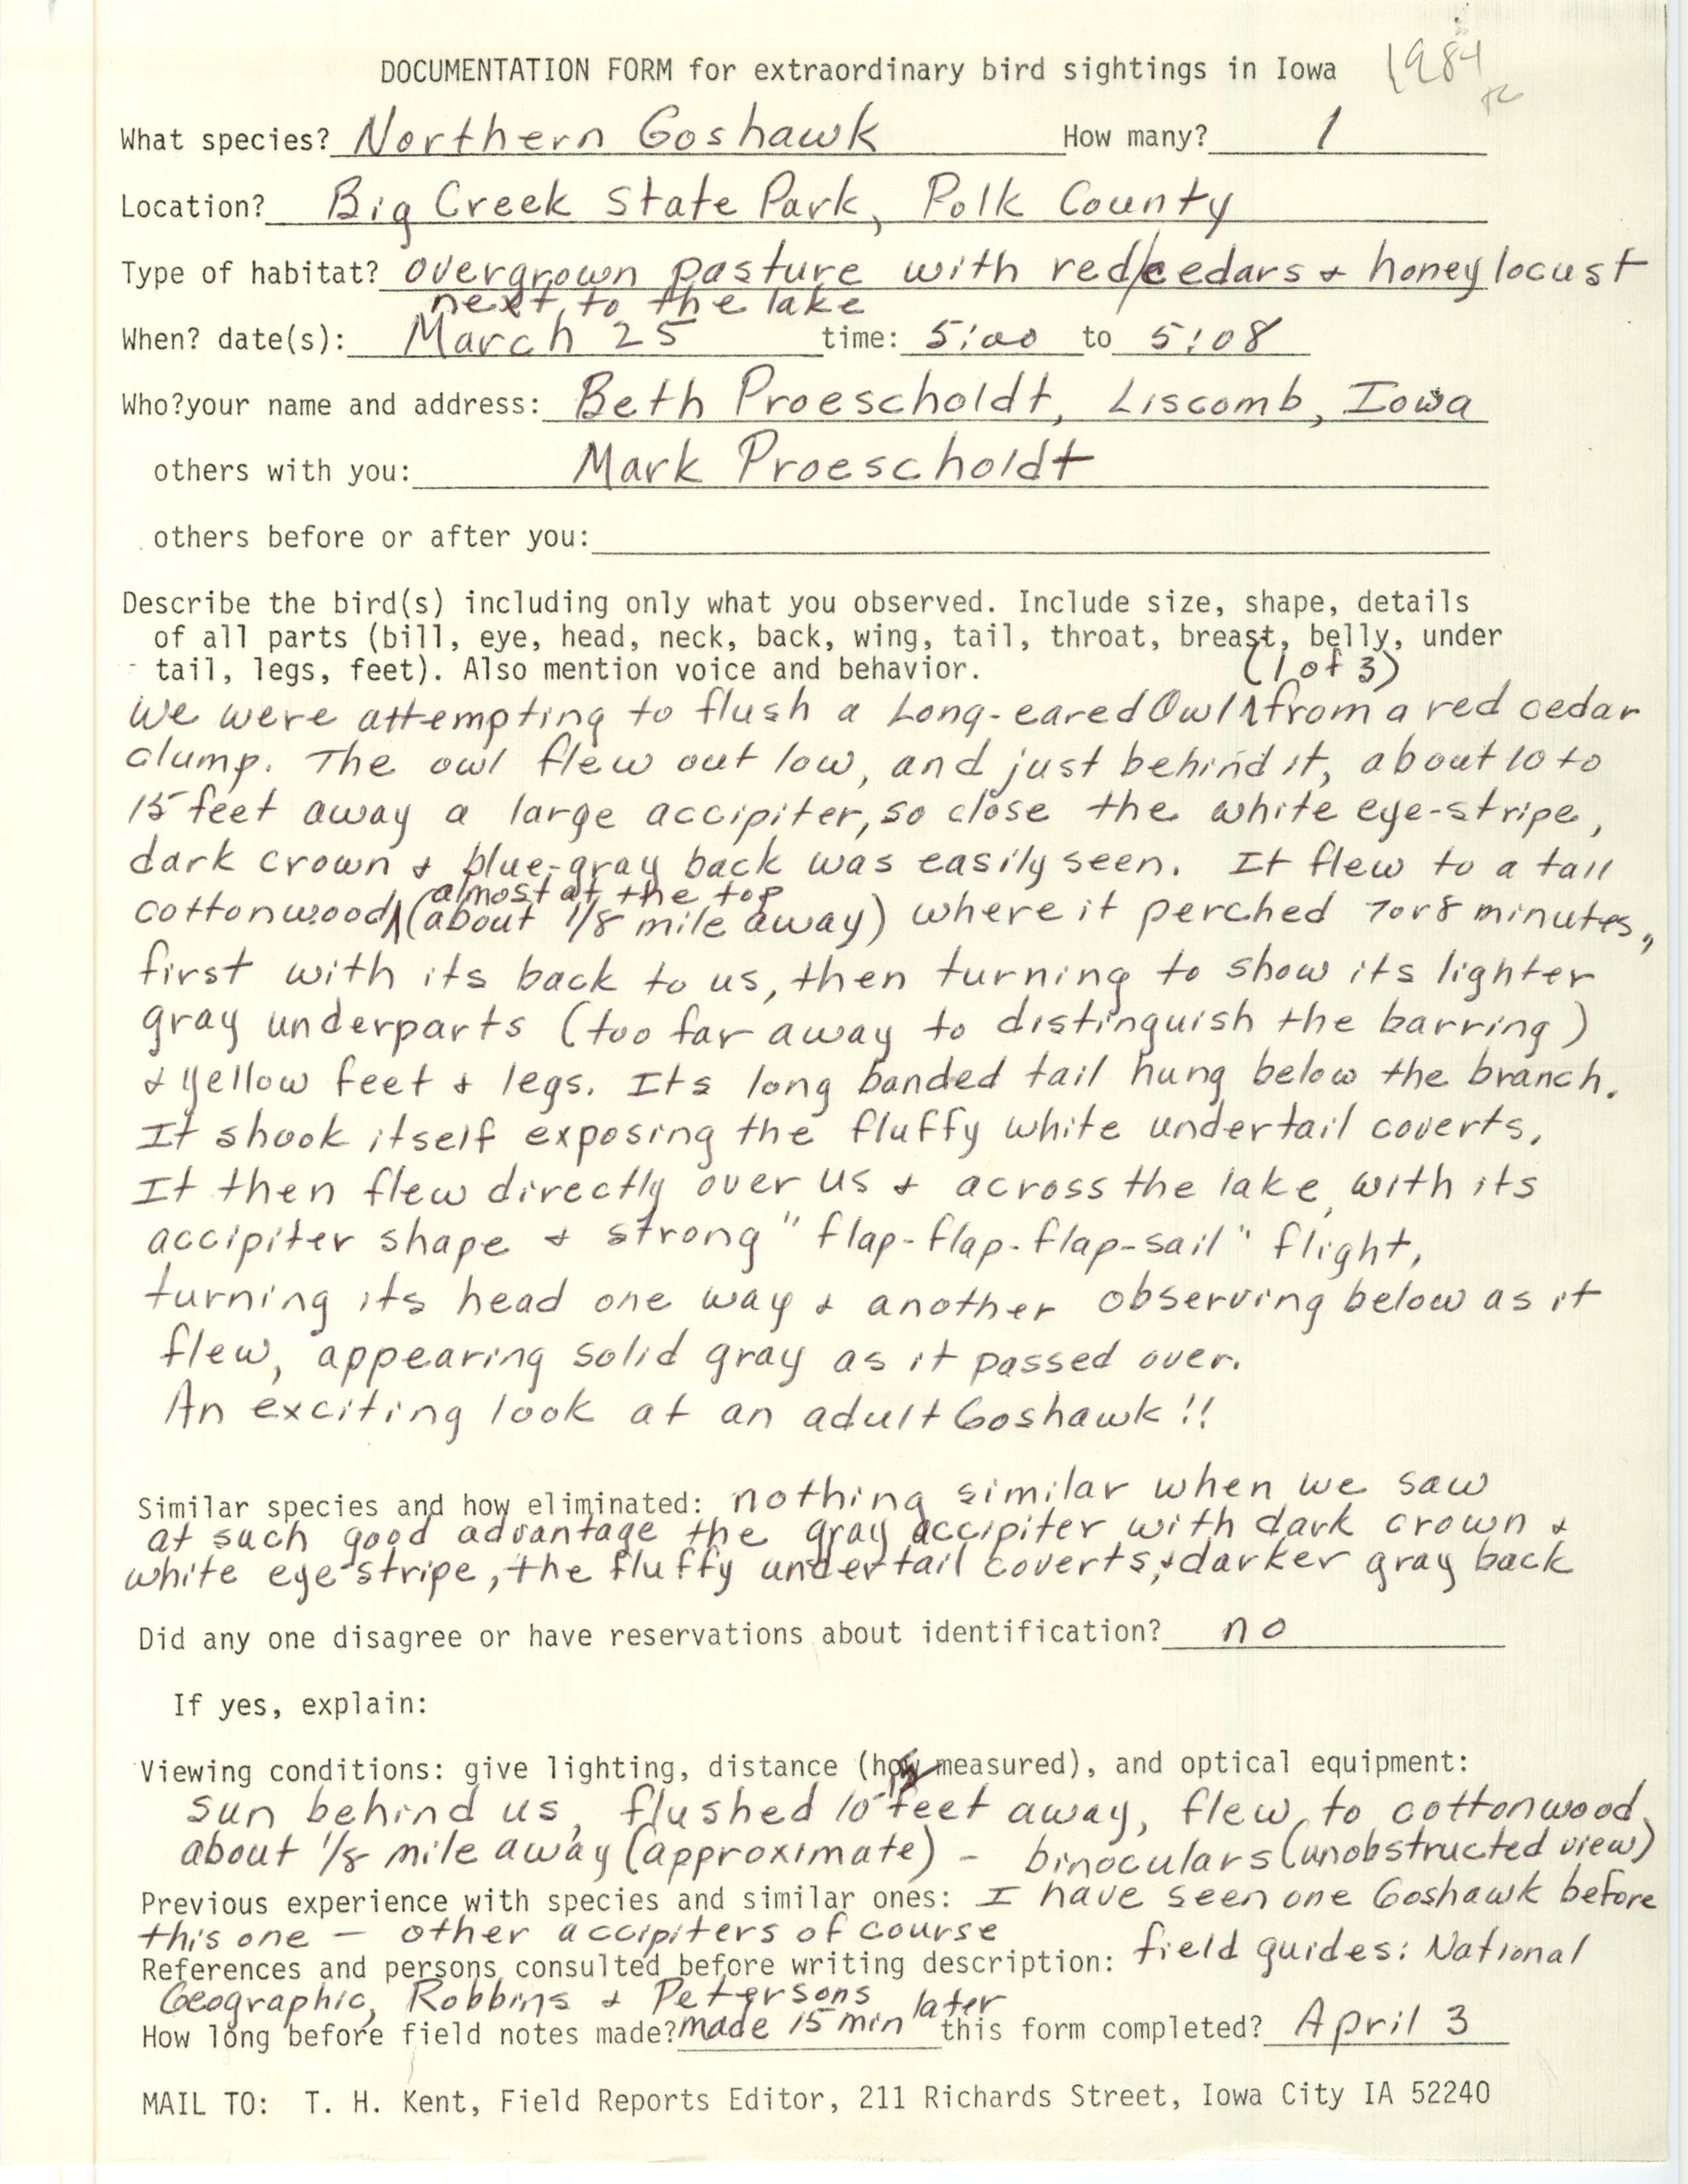 Rare bird documentation form for Northern Goshawk at Big Creek State Park, 1984